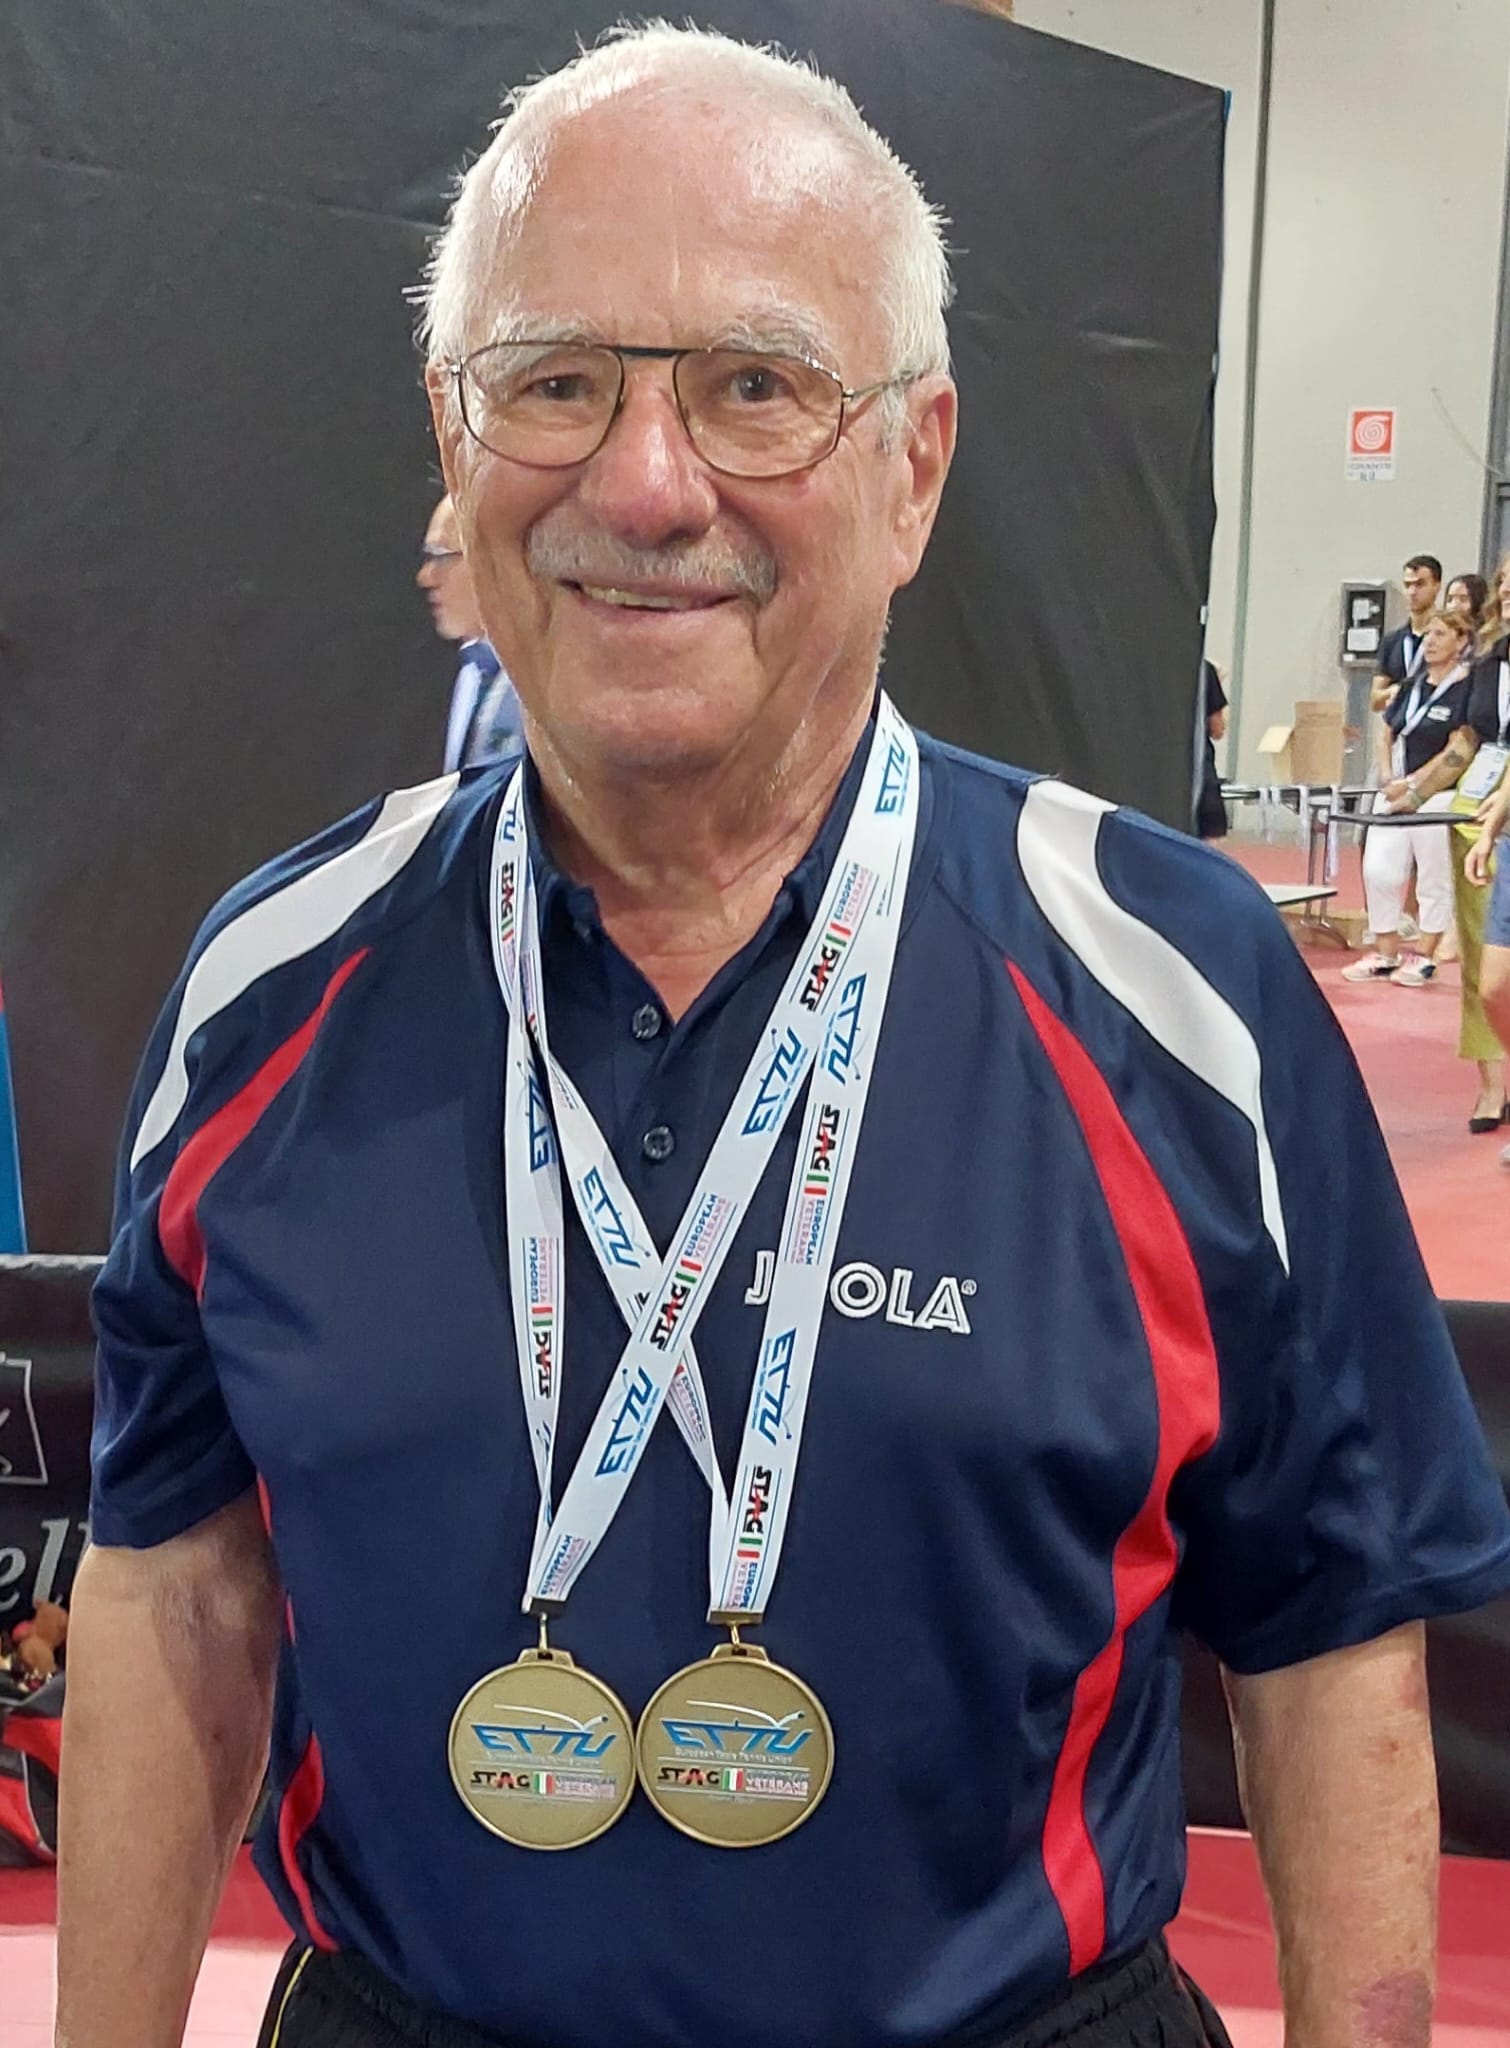 Zweimal Bronze bei der Europameisterschaft in Rimini